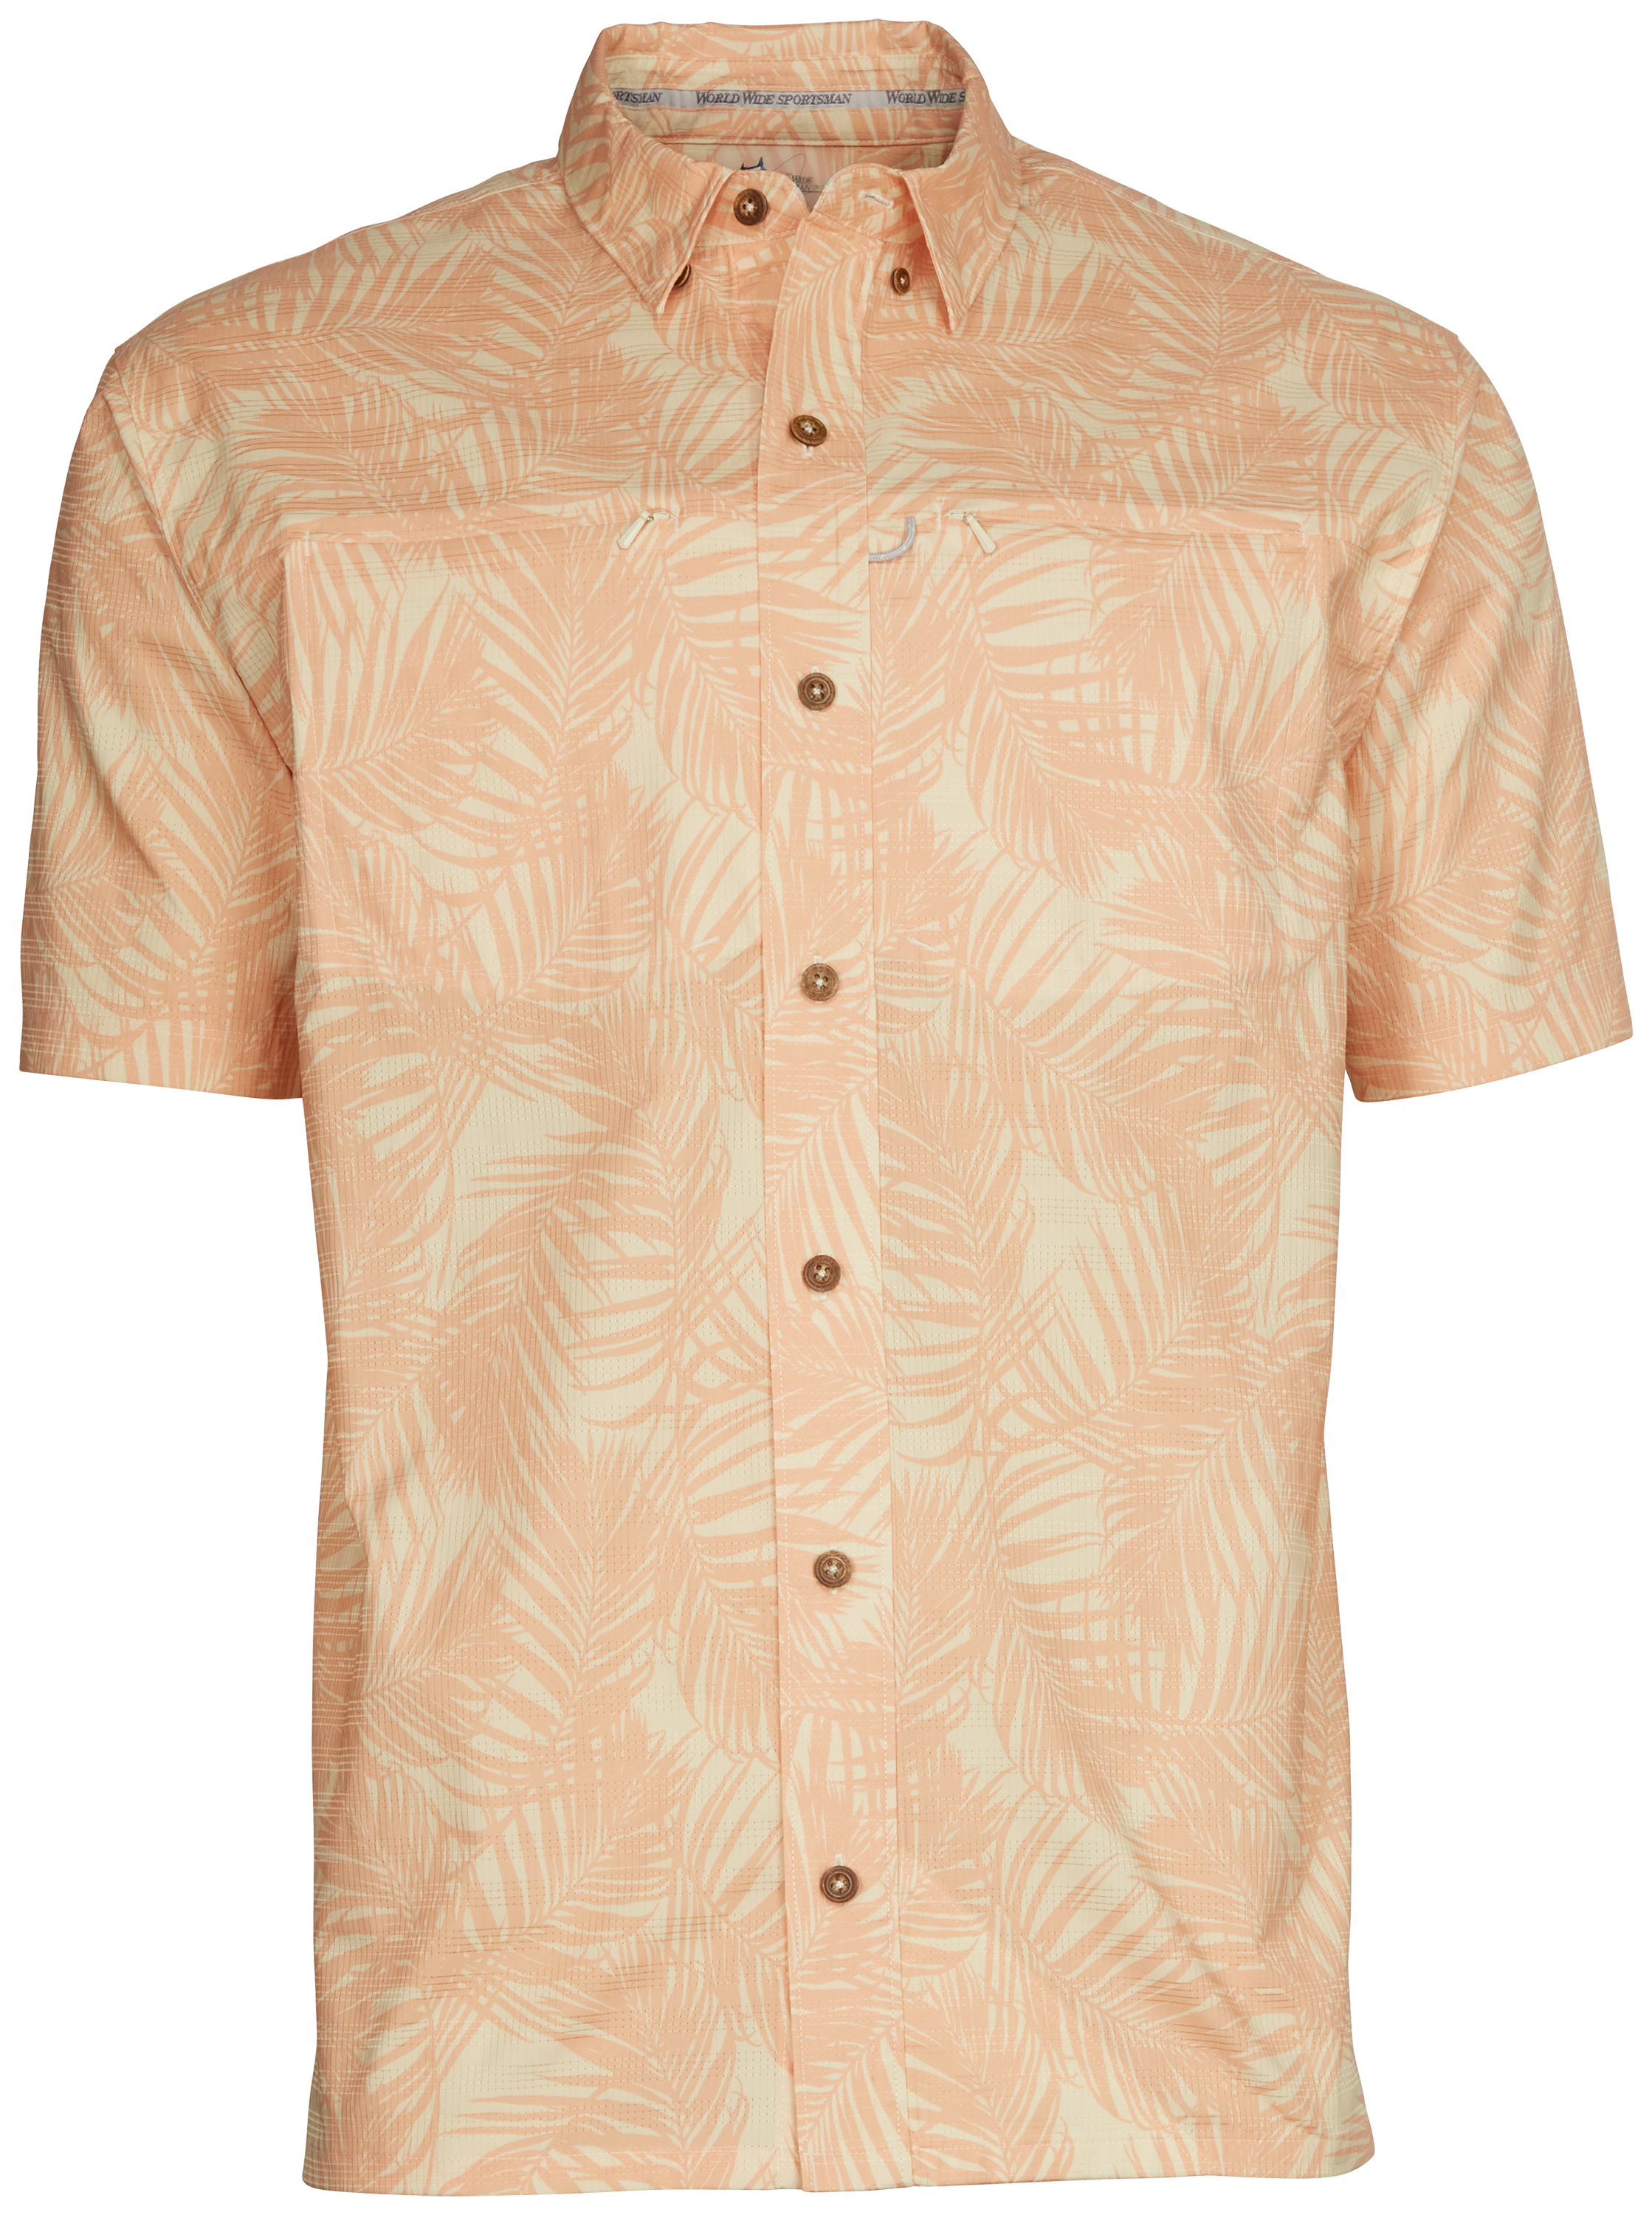 World Wide Sportsman Seacrest Print Short-Sleeve Button-Down Shirt for Men - Apricot Palms - S